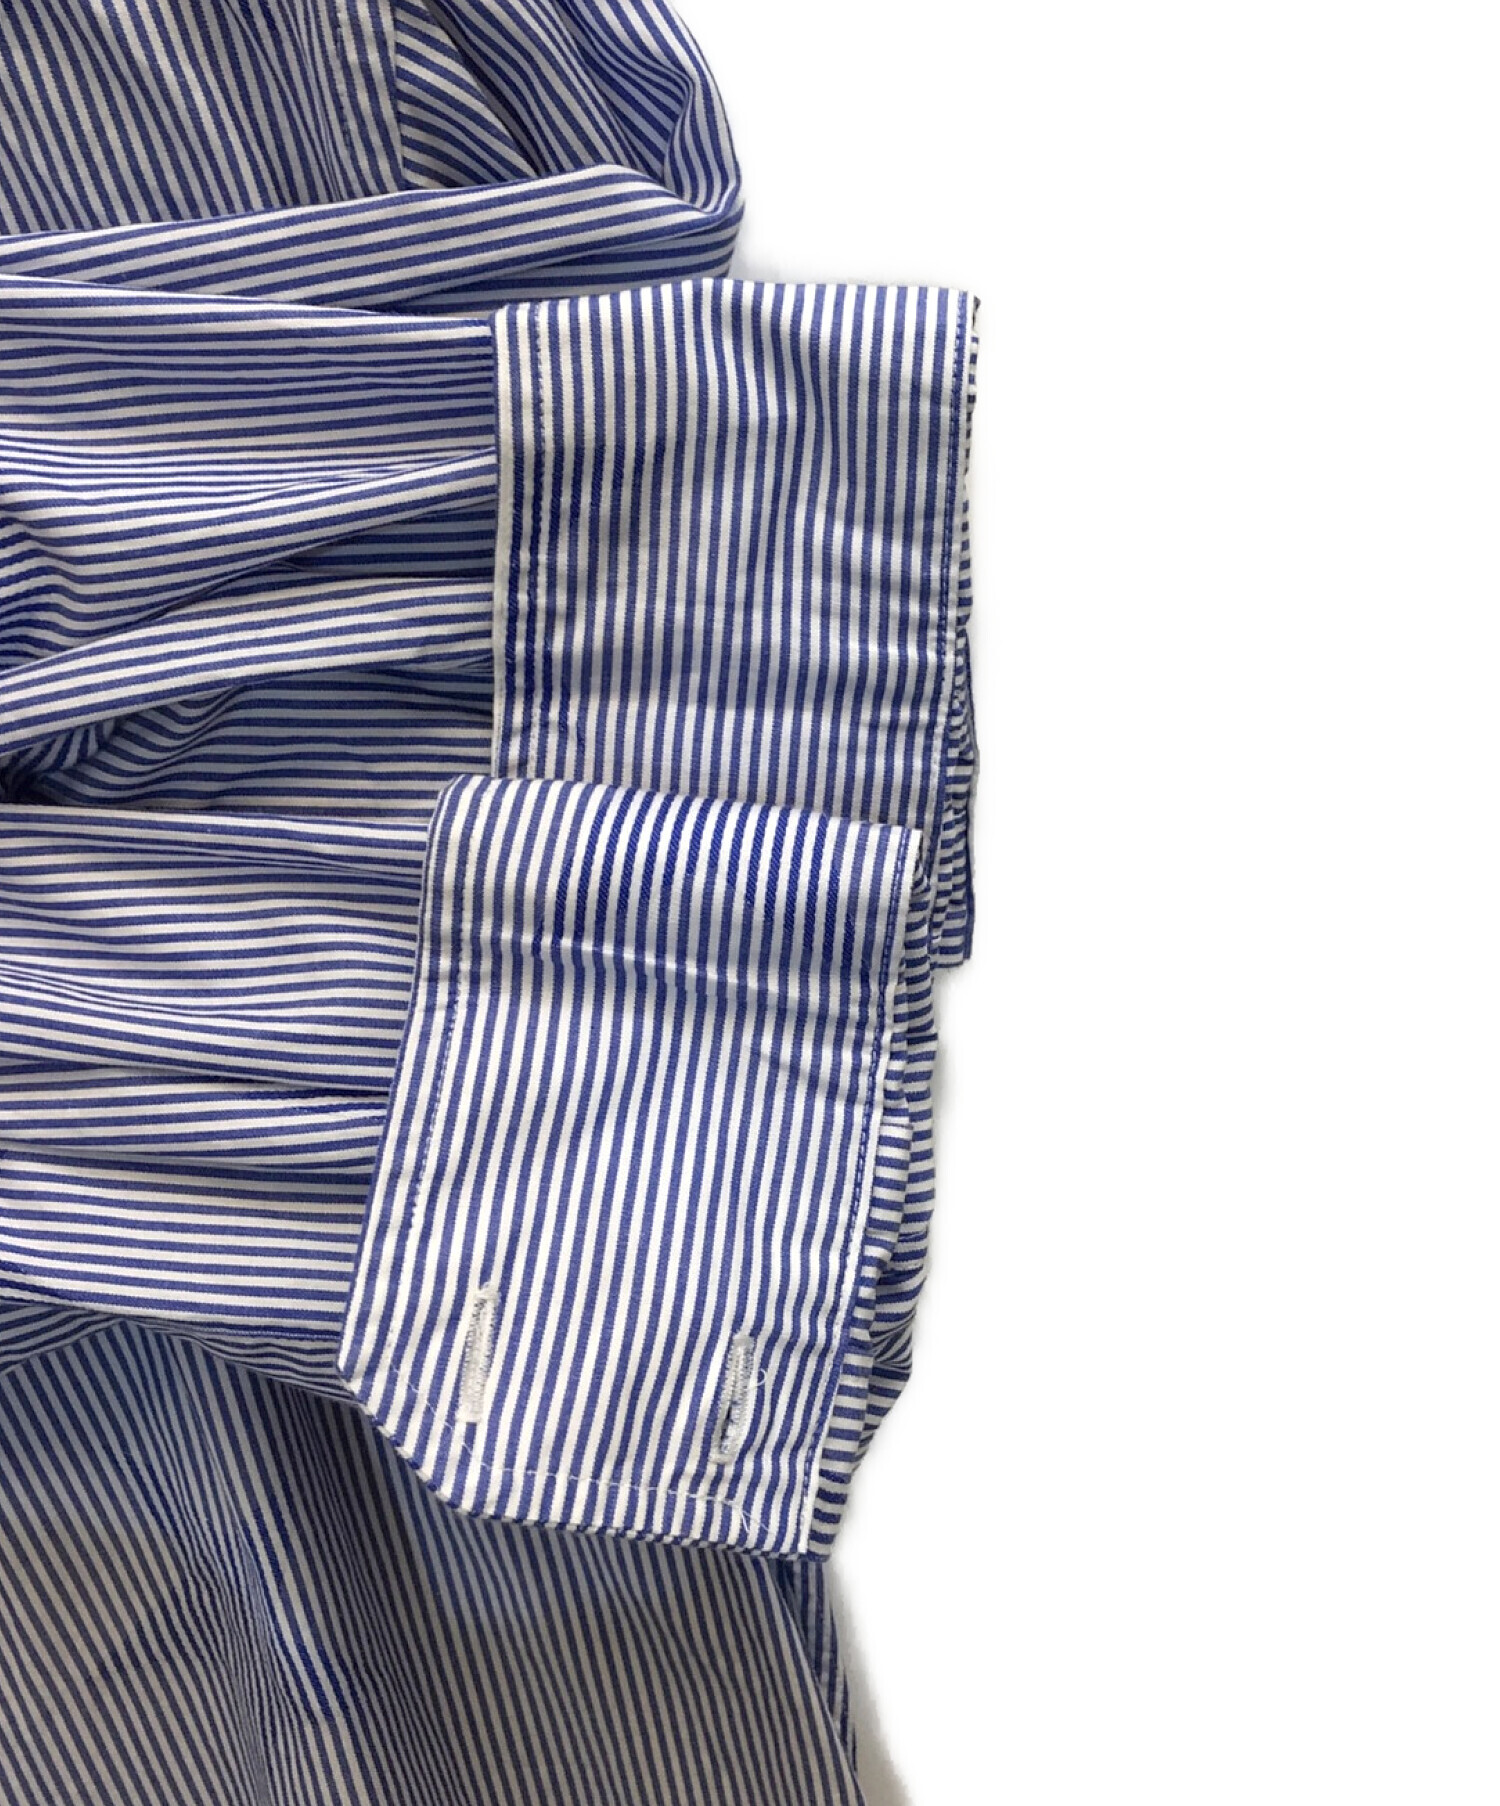 Vivienne Westwood man (ヴィヴィアン ウェストウッド マン) オーブ刺繍ピンストライプシャツ　スター柄シャツ ブルー サイズ:44